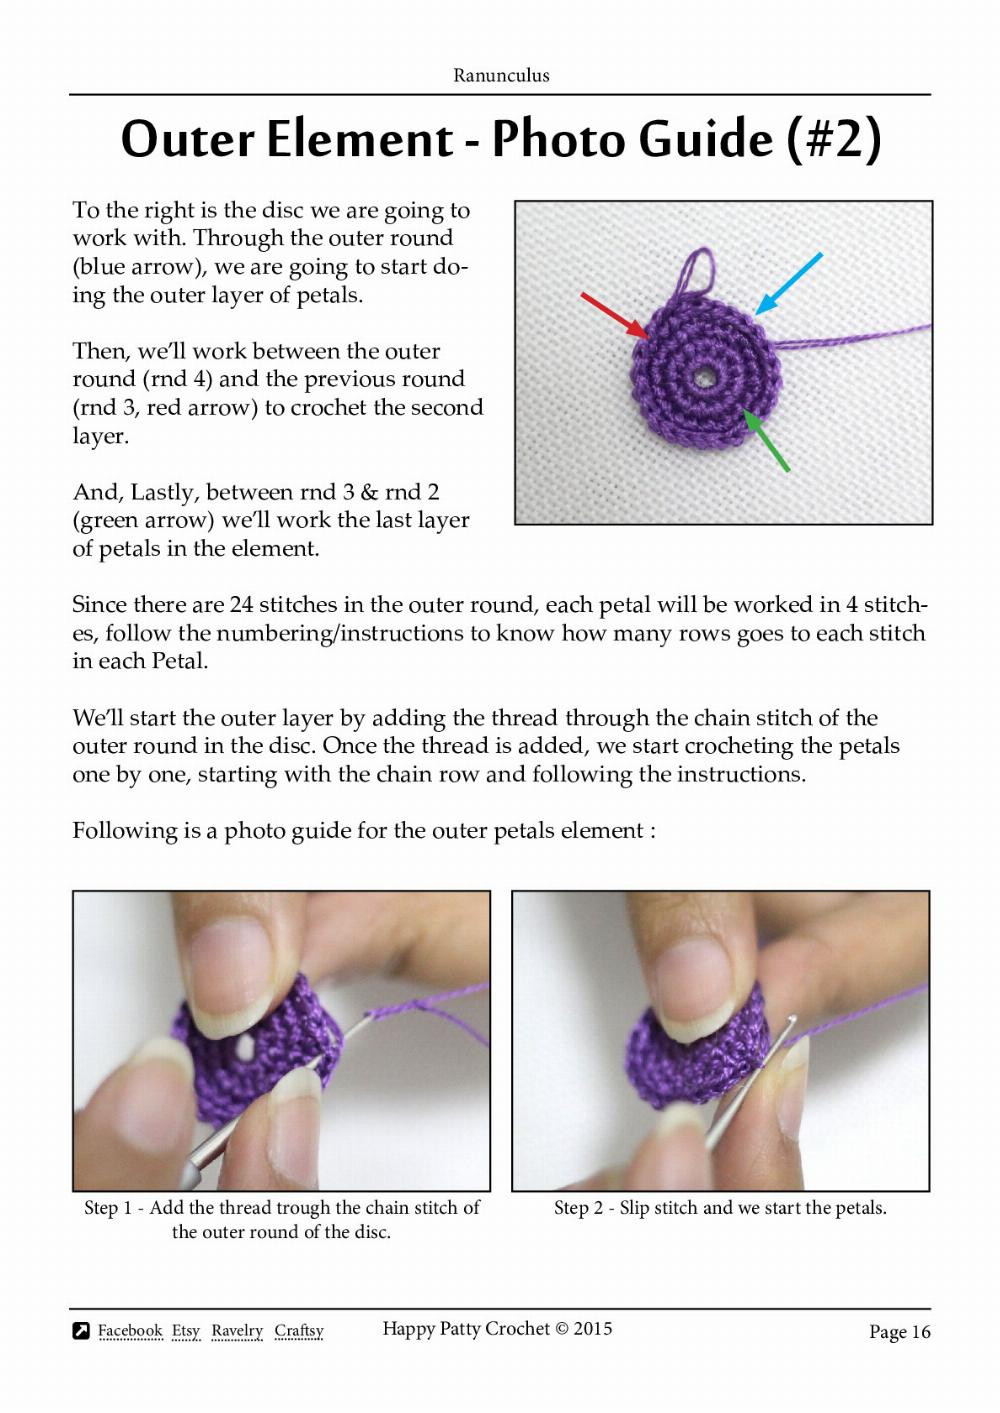 Ranunculus crochet pattern